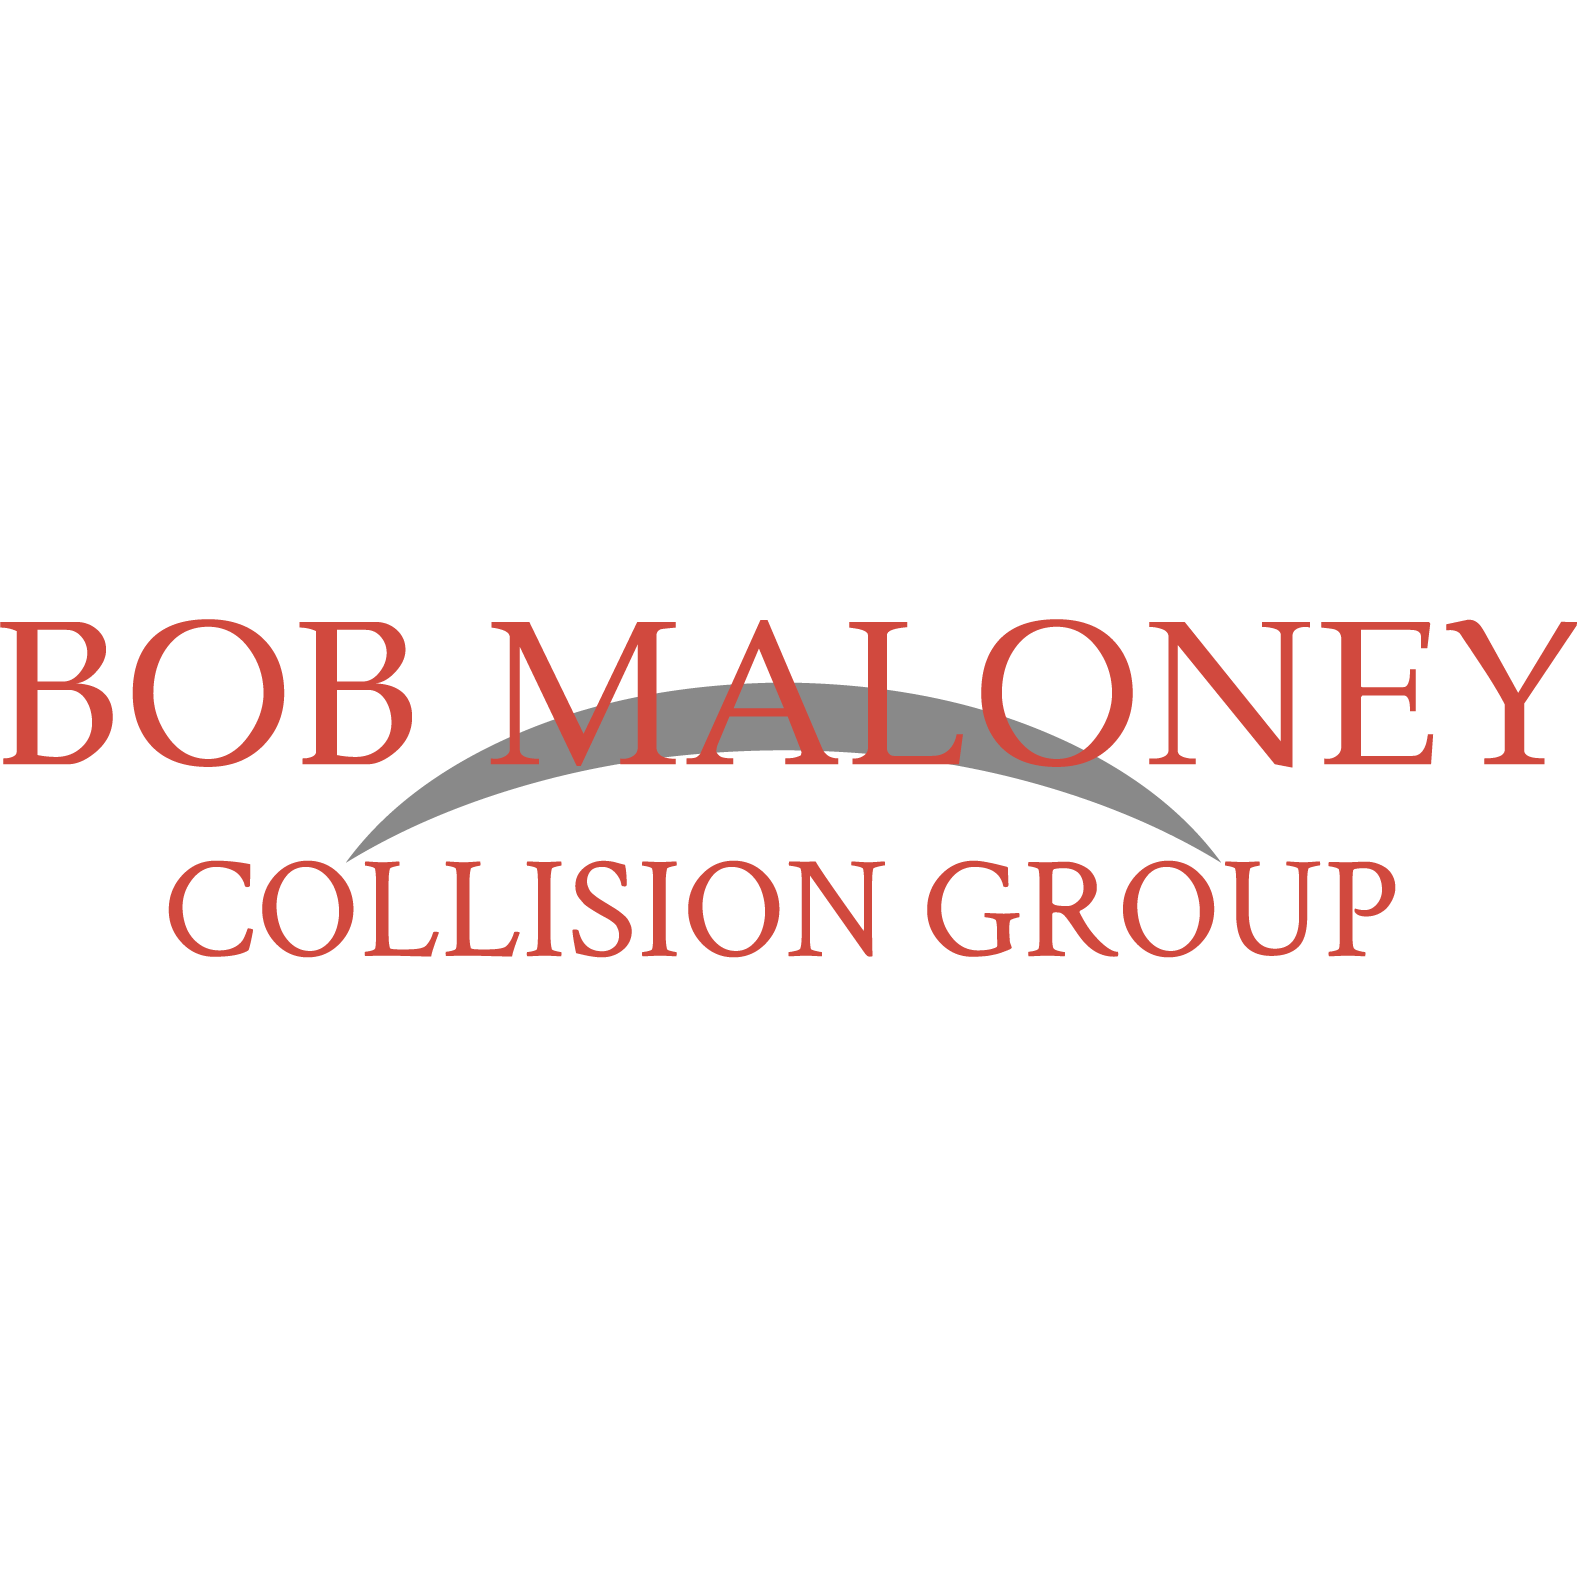 Bob Maloney Collision - Rogers - Rogers, AR 72758 - (479)636-4321 | ShowMeLocal.com